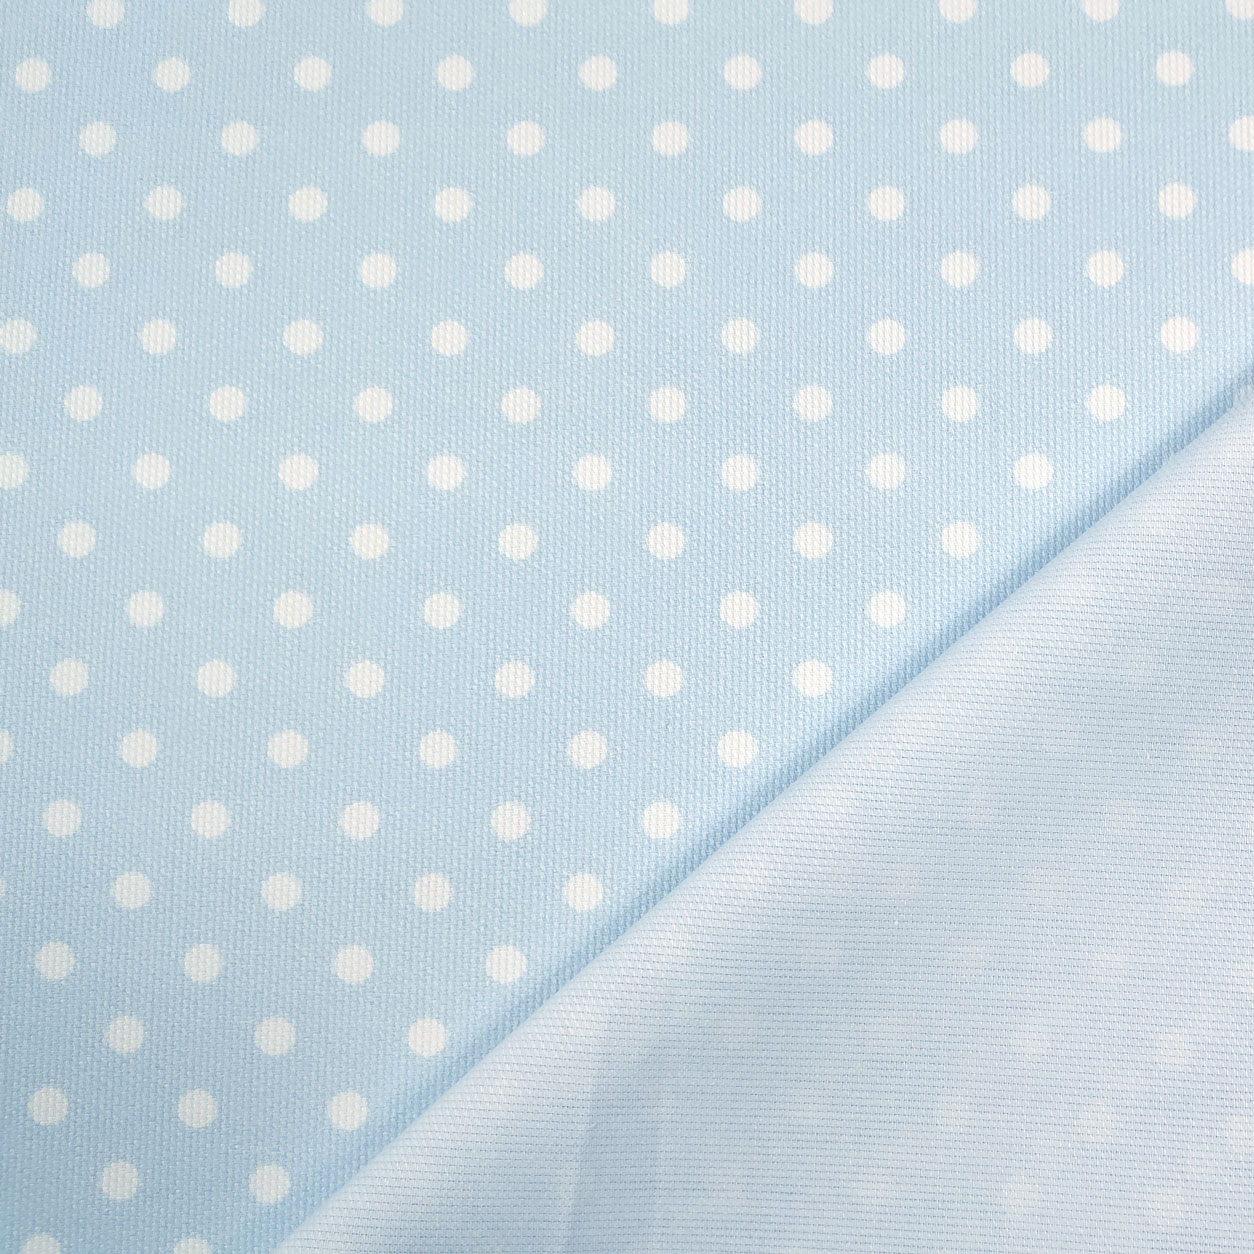 Tessuto happy piquet con pois bianchi sfondo azzurro